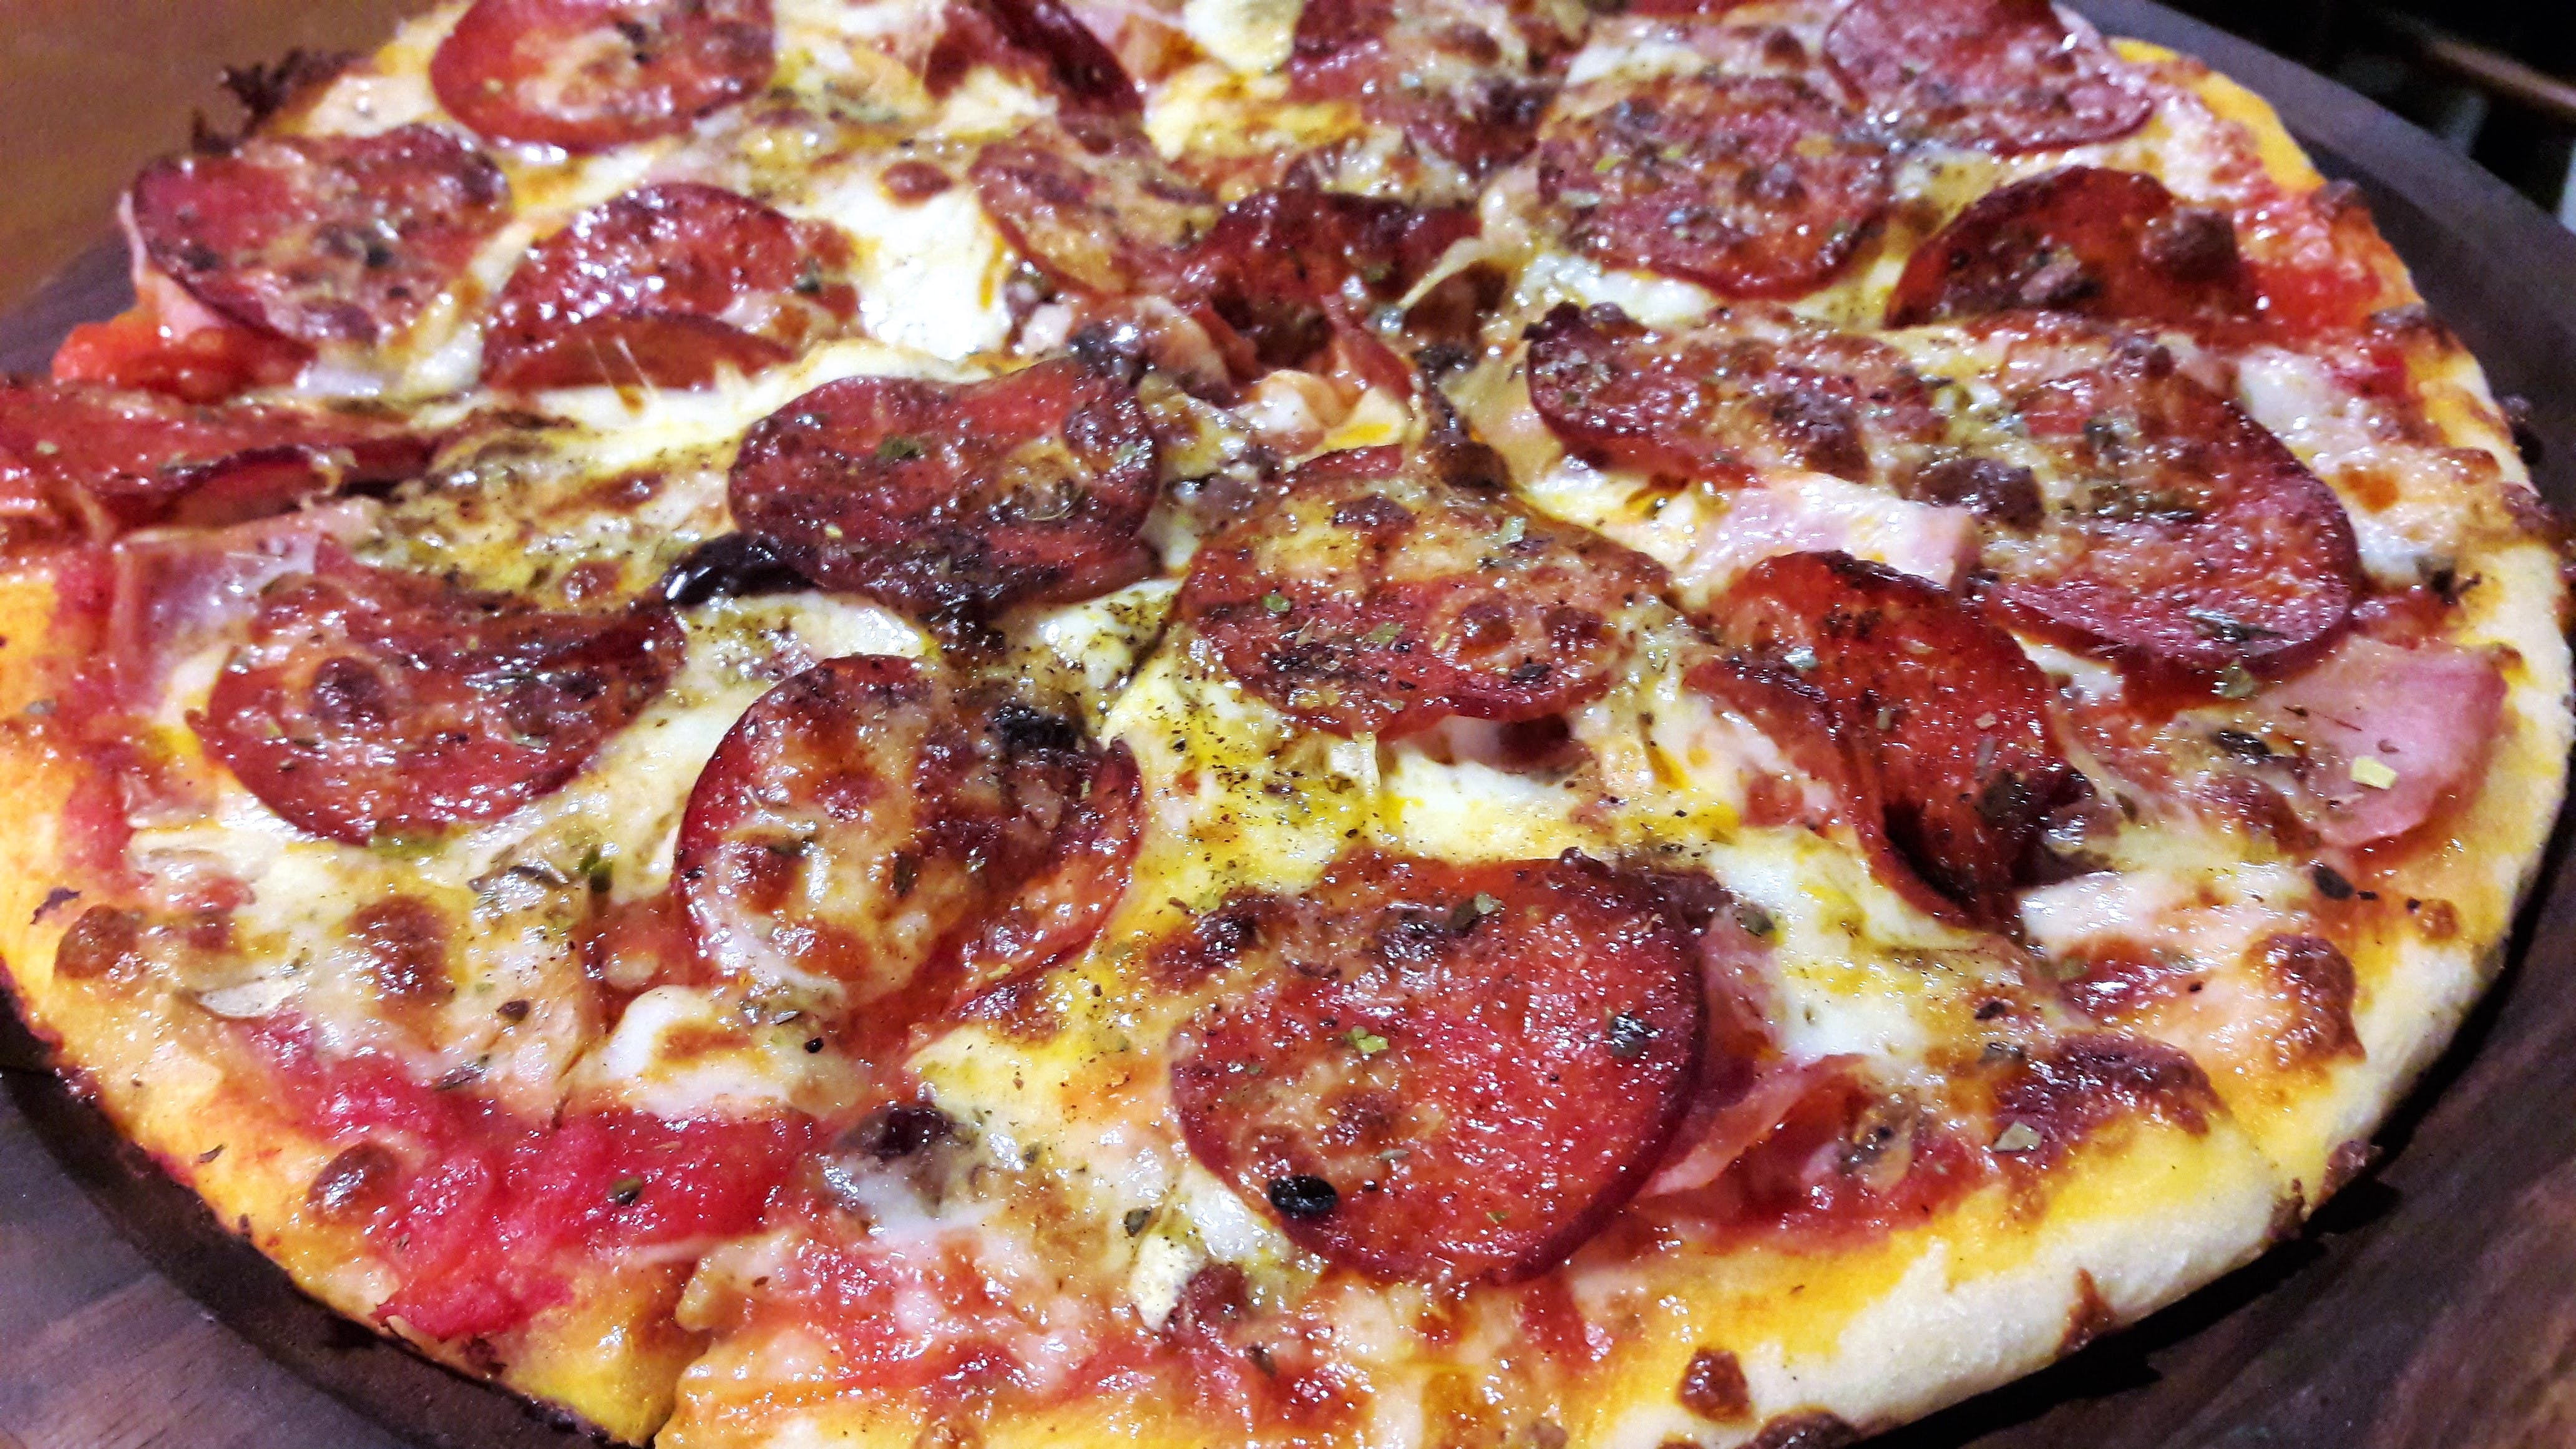 Dish,Food,Pizza,Cuisine,Pizza cheese,California-style pizza,Ingredient,Sicilian pizza,Flatbread,Pepperoni